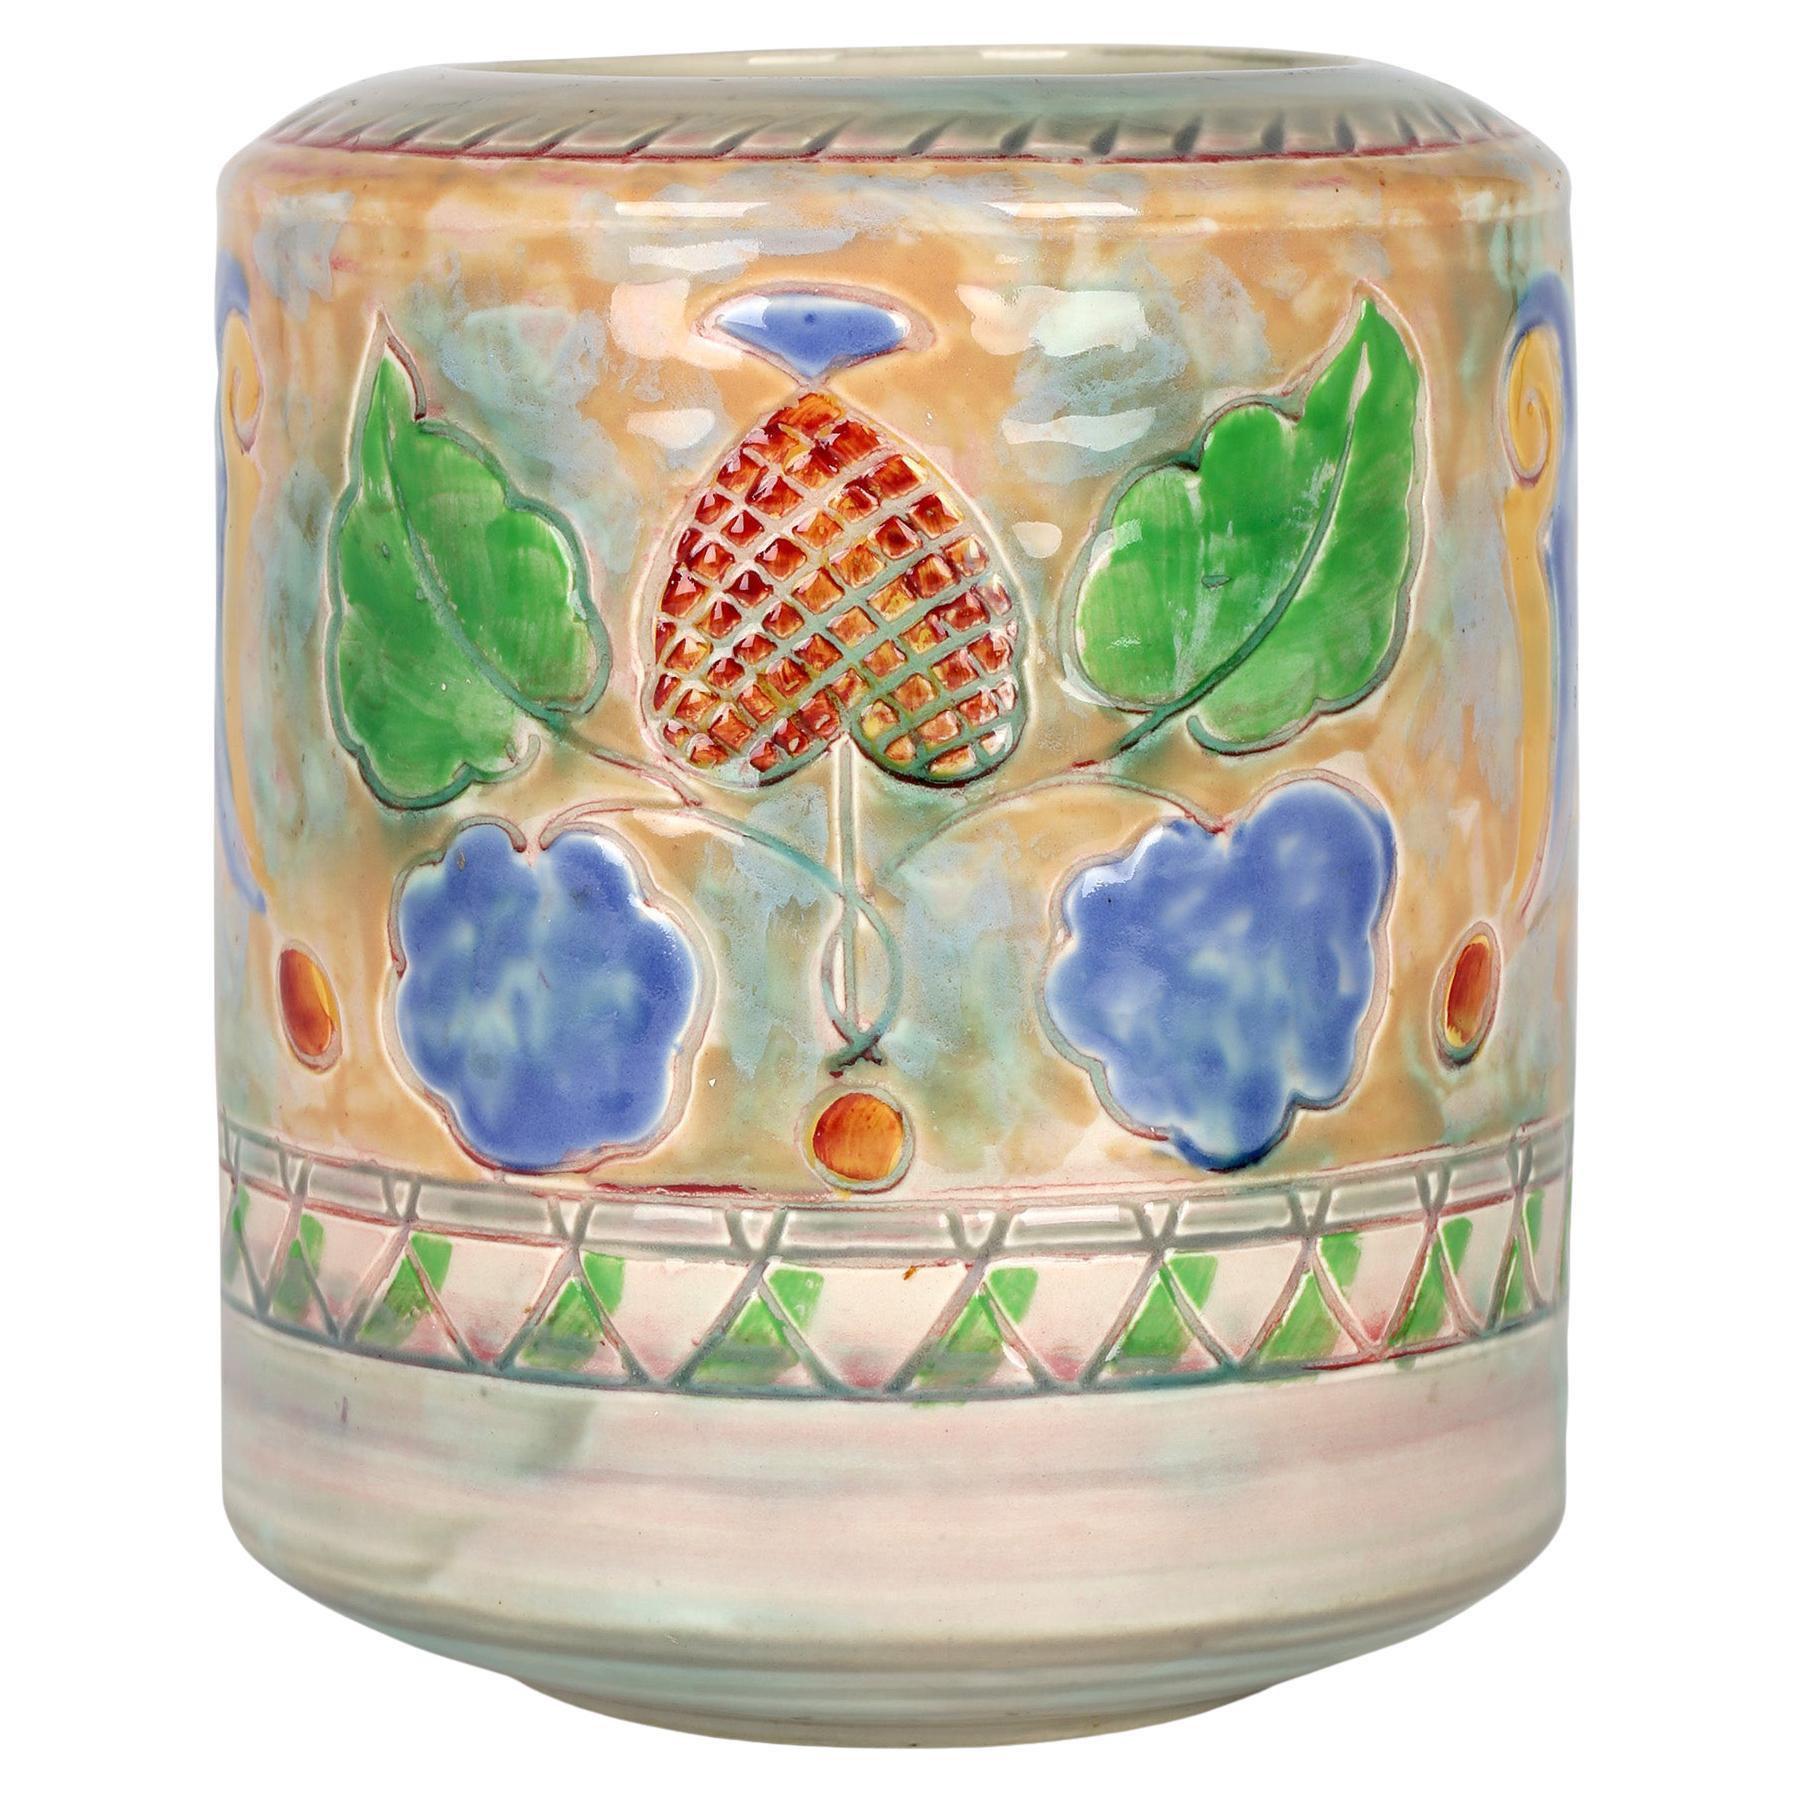 Frank Brangwyn Royal Doulton Arts & Crafts Vase aus Blatt- und Beerenkunst-Keramik